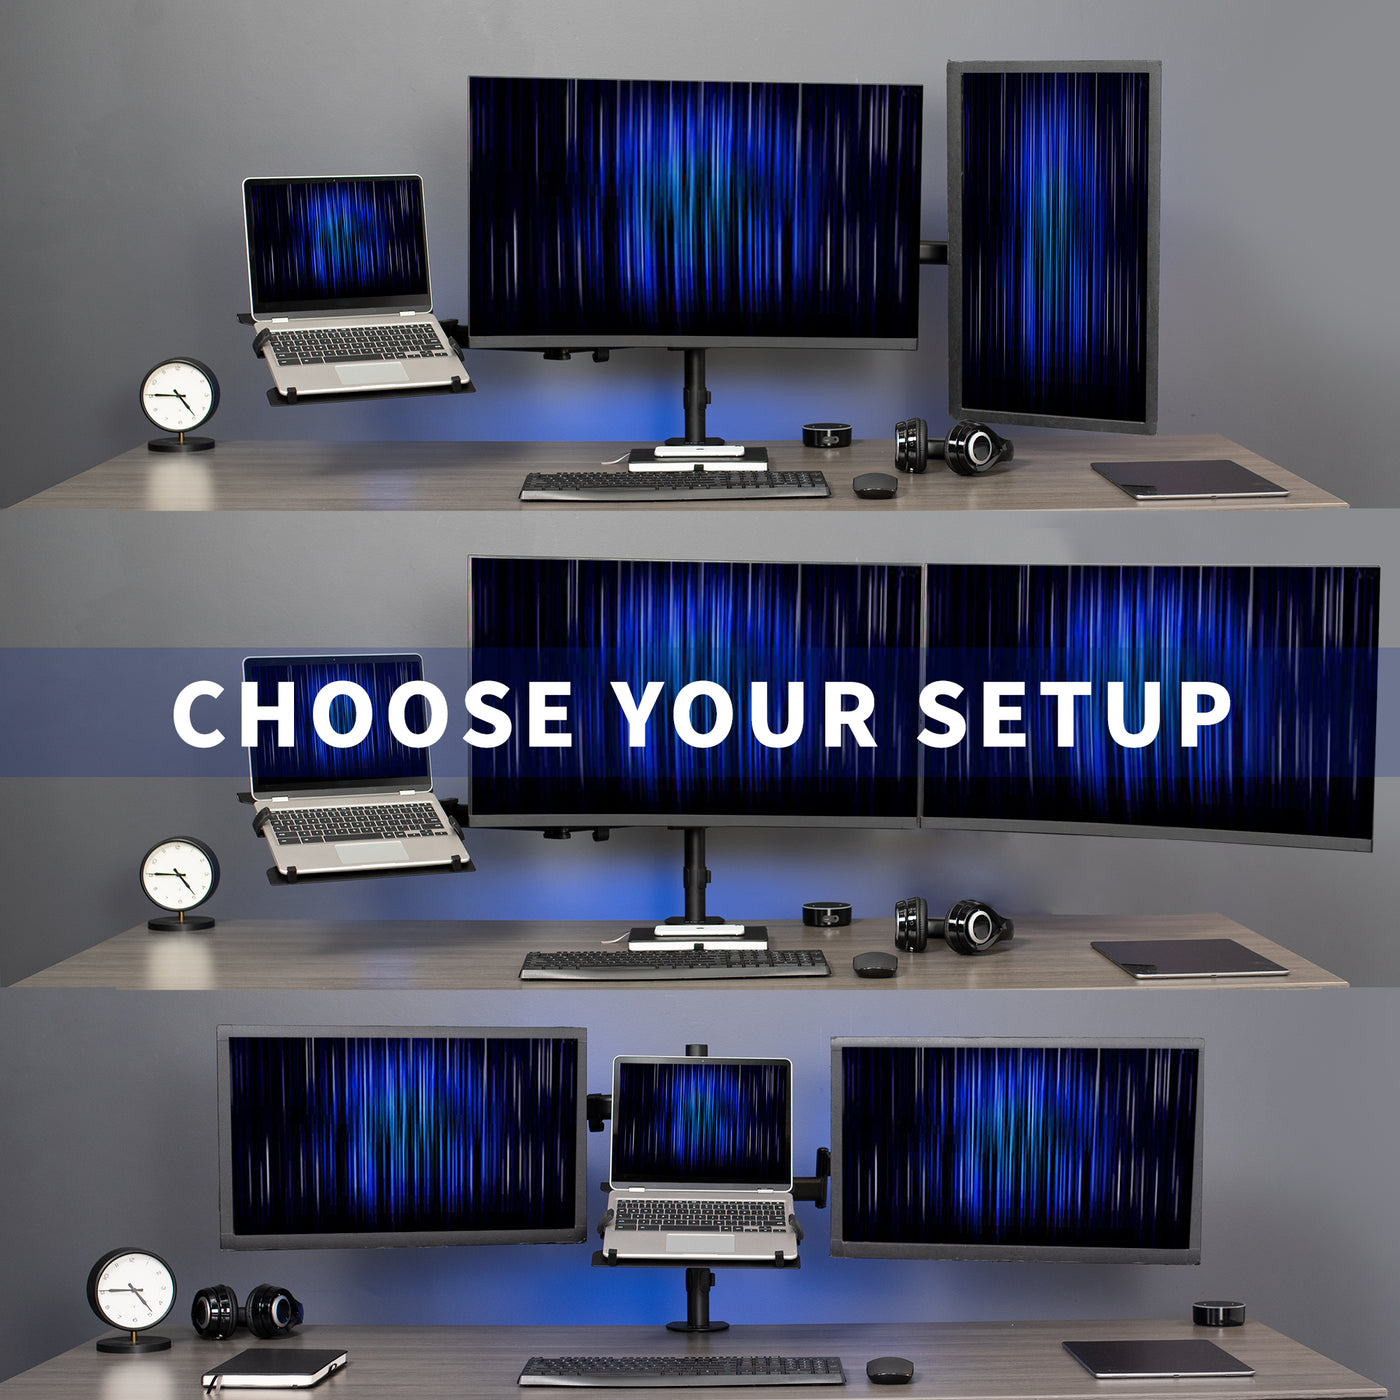 Black Dual Monitor + Single Laptop Desk Mount